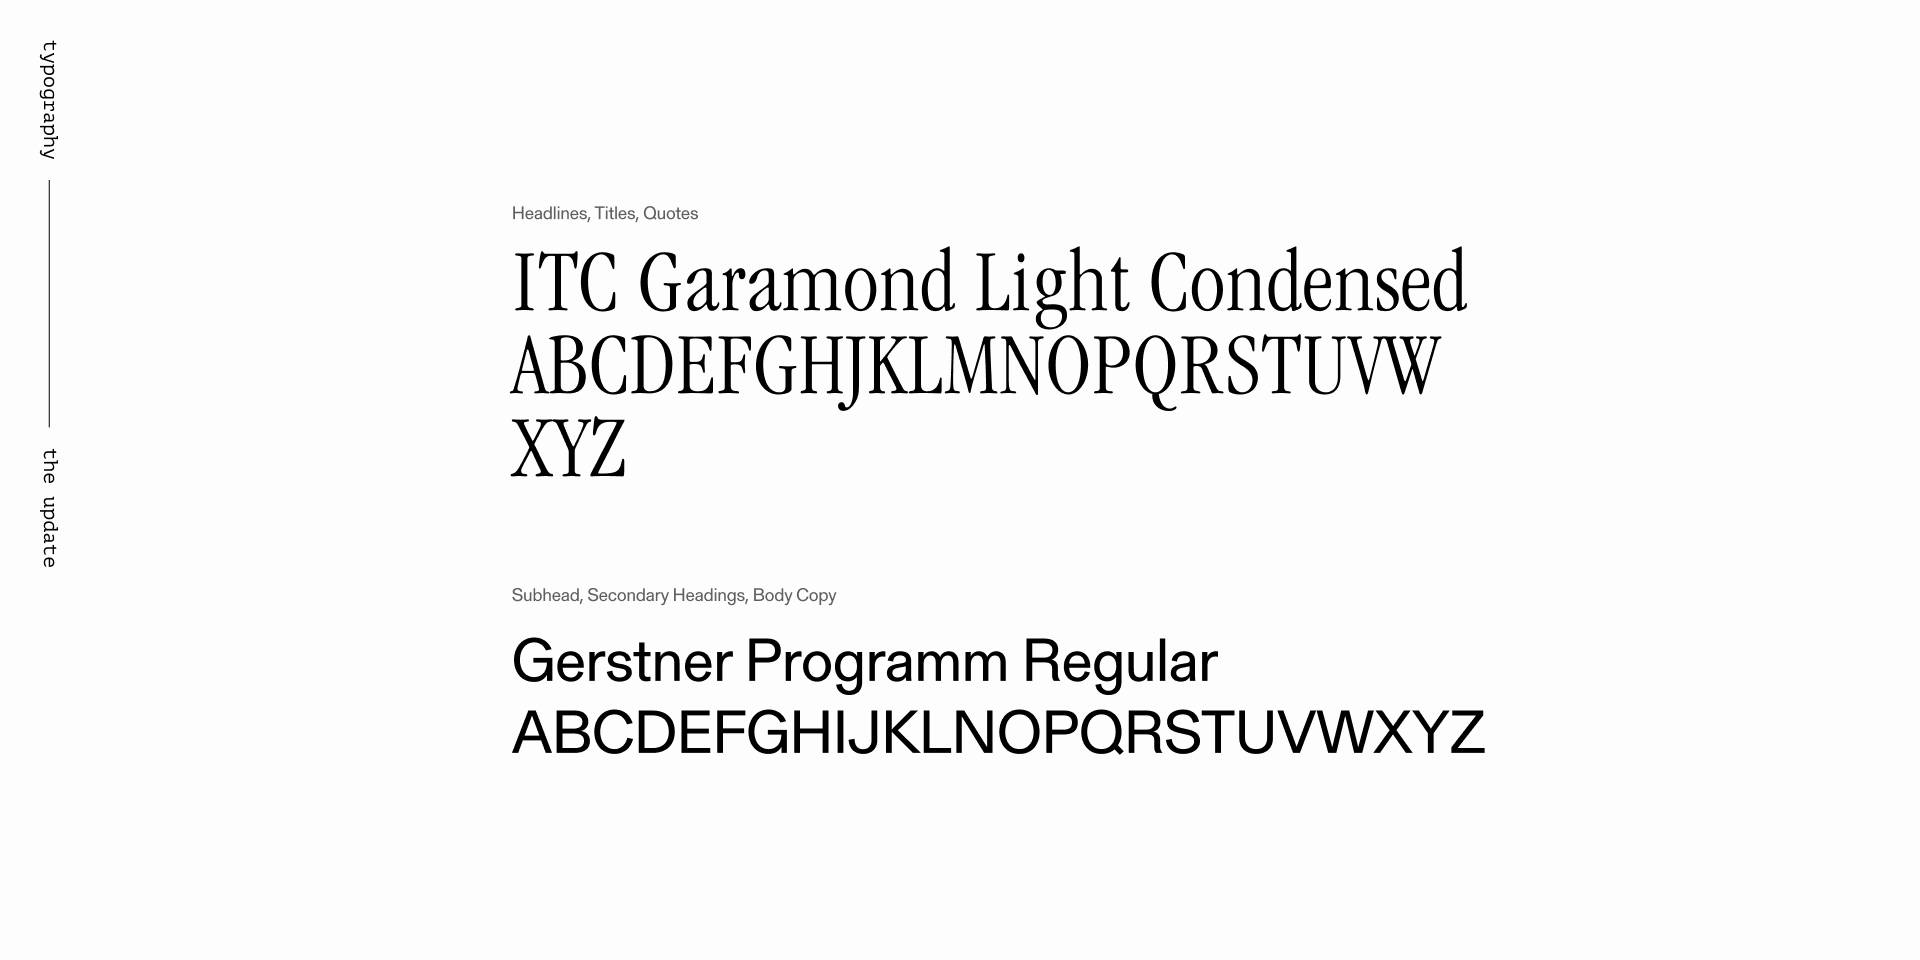 Typography-update: typefaces